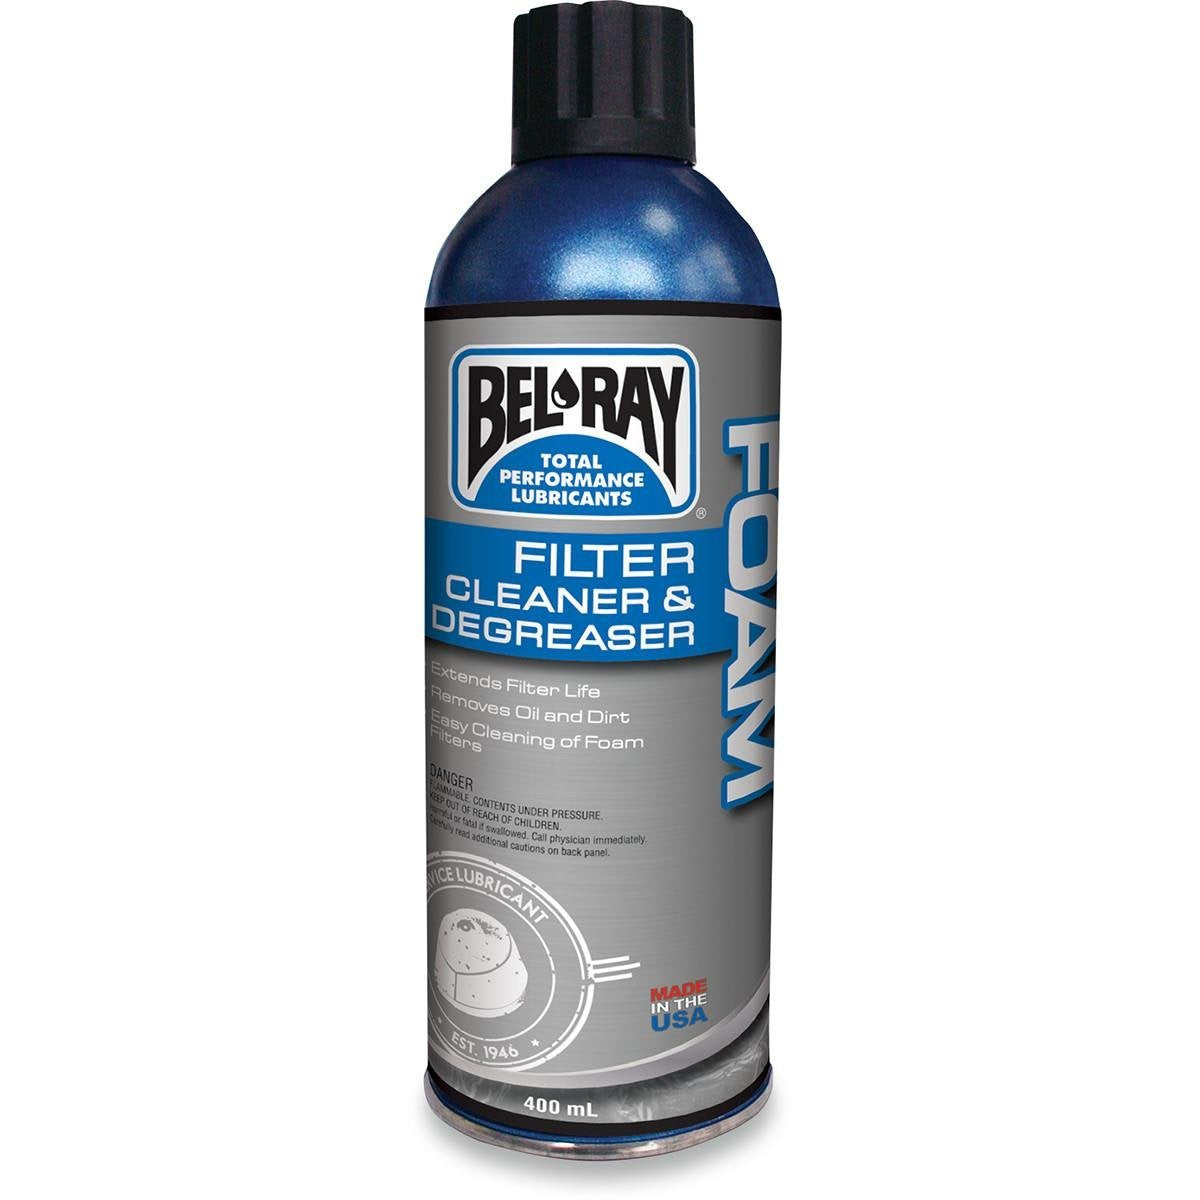 Bel Ray - Foam Filter Cleaner & Degreaser